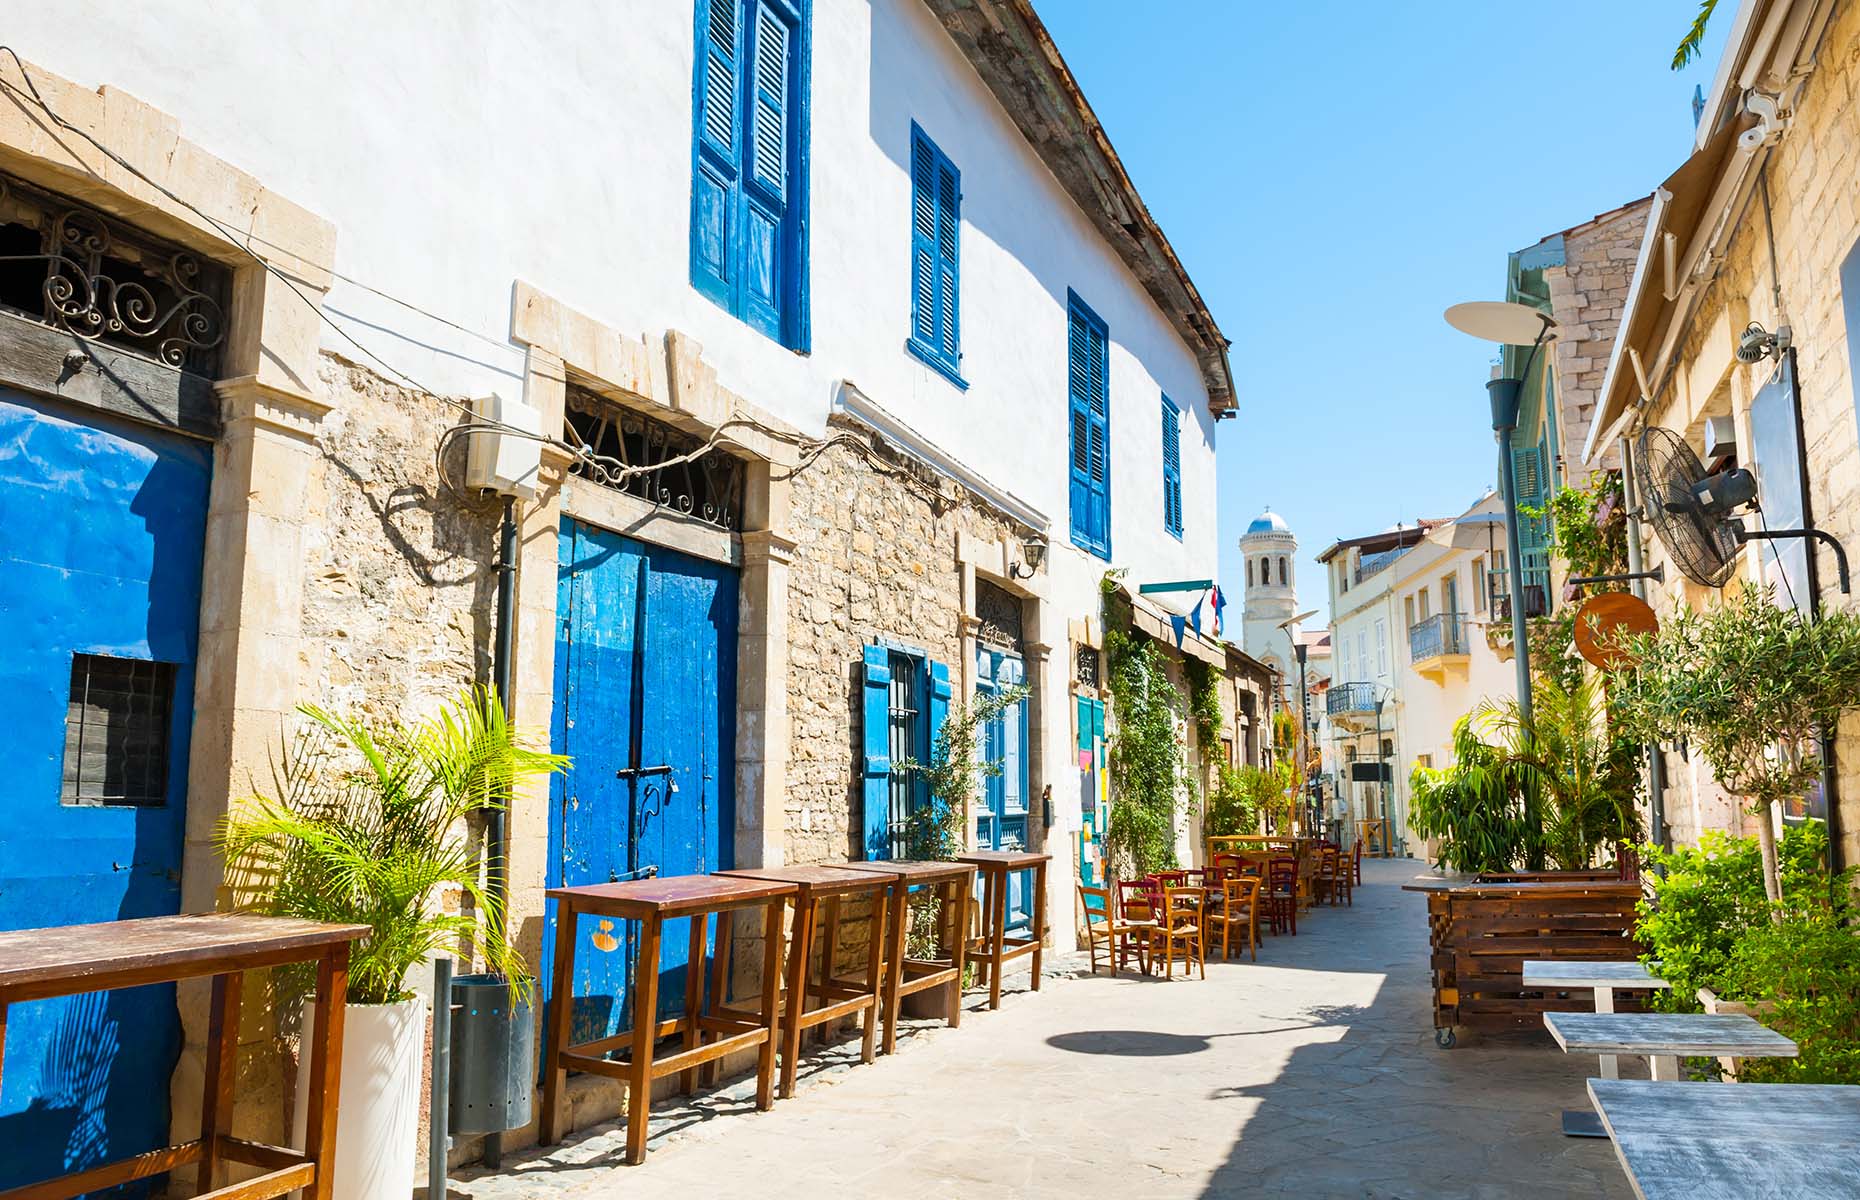 Limassol Old Town (Image: Olga Gavrilova/Shutterstock)